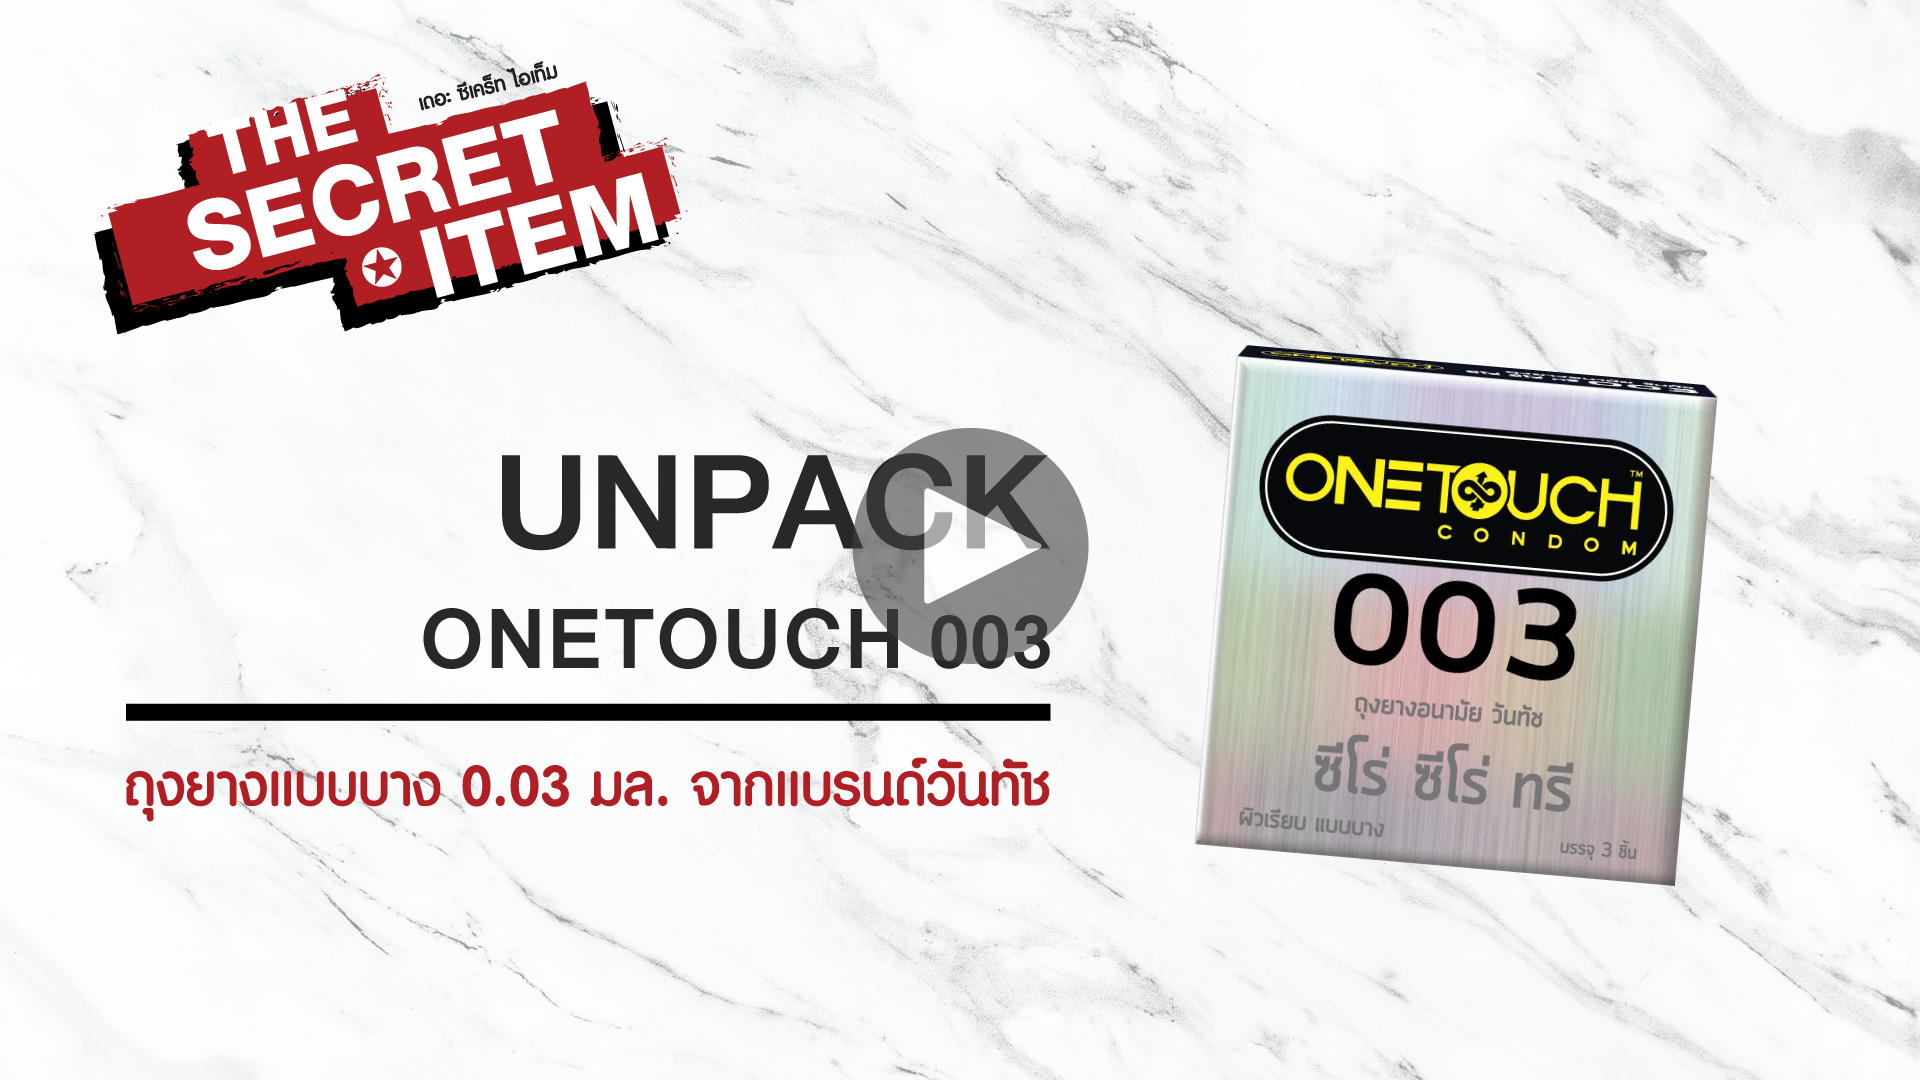 THE SECRET ITEM - Unpack | แกะกล่อง ONETOUCH 003 ถุงยางอนามัยแบบบาง เพียง 0.03 มม.